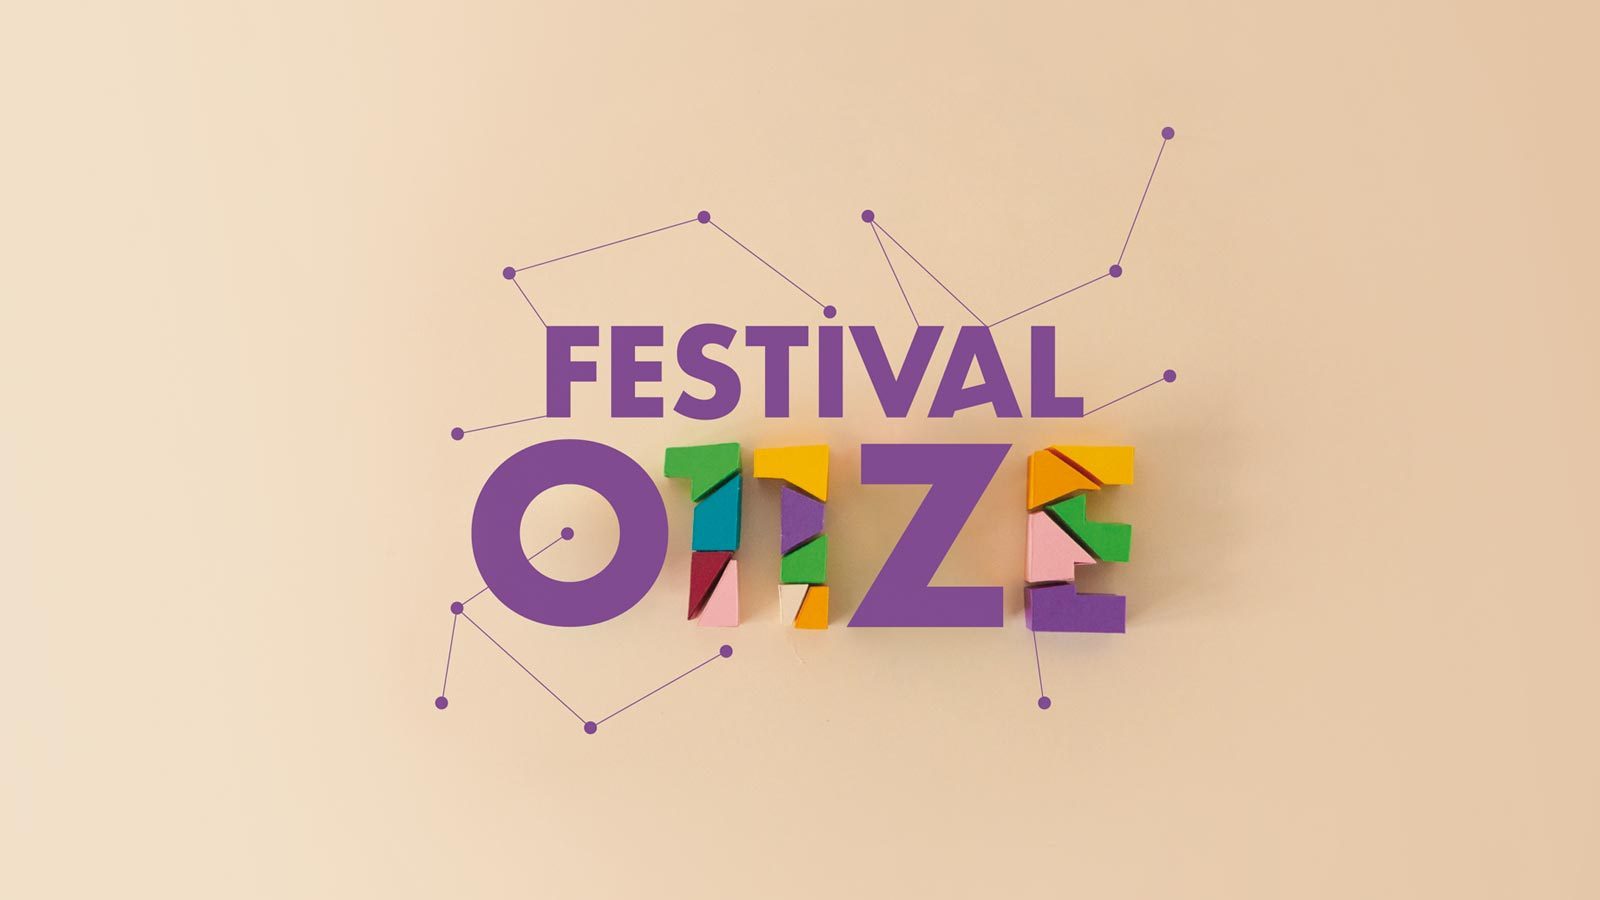 Festival O11ZE